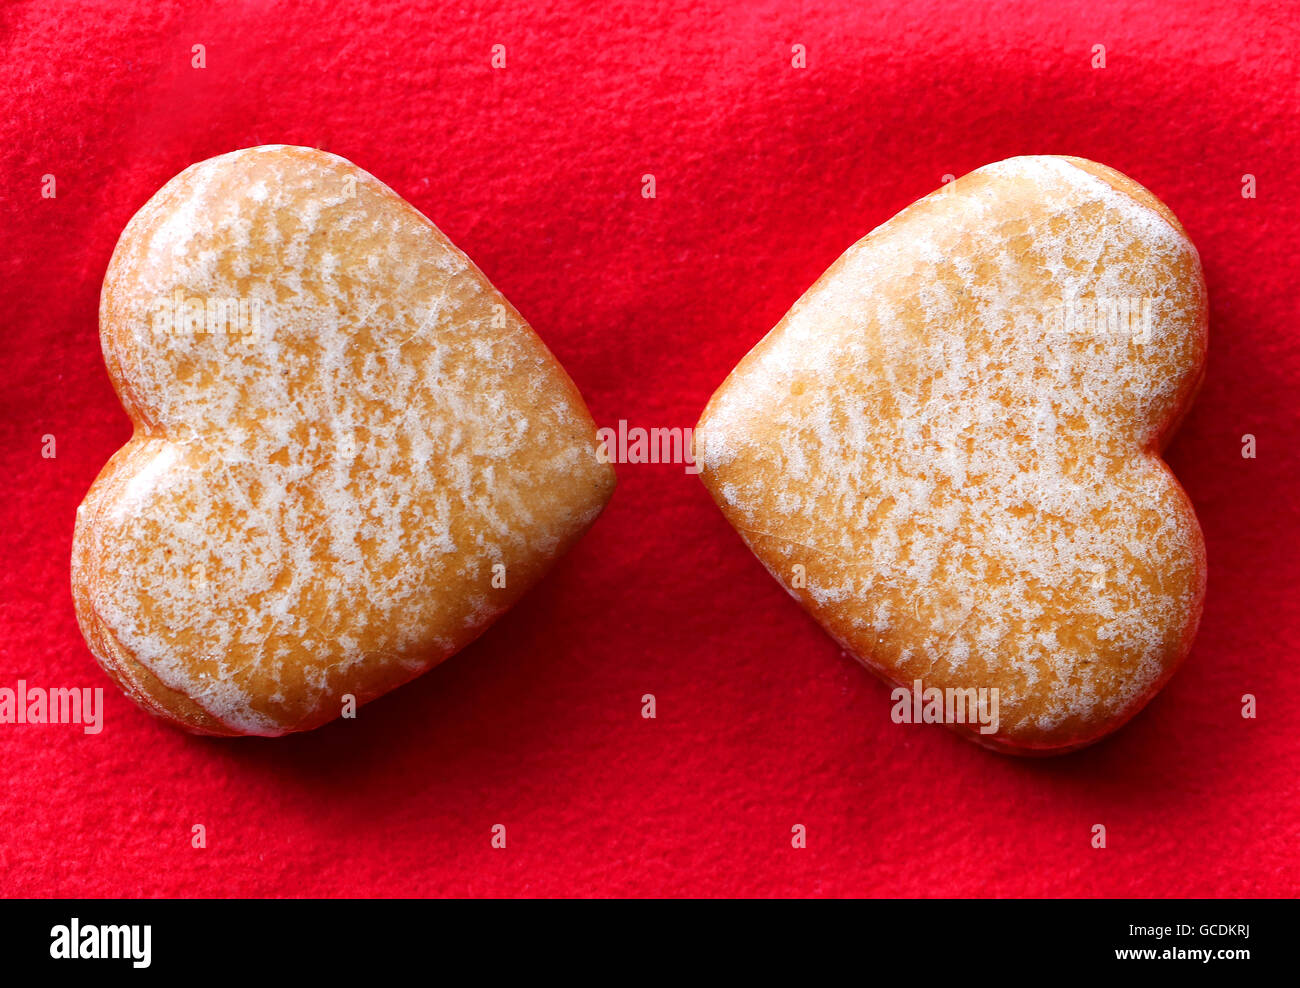 Leckere Kekse in der Form eines Herzens, fotografiert in Nahaufnahme Stockfoto